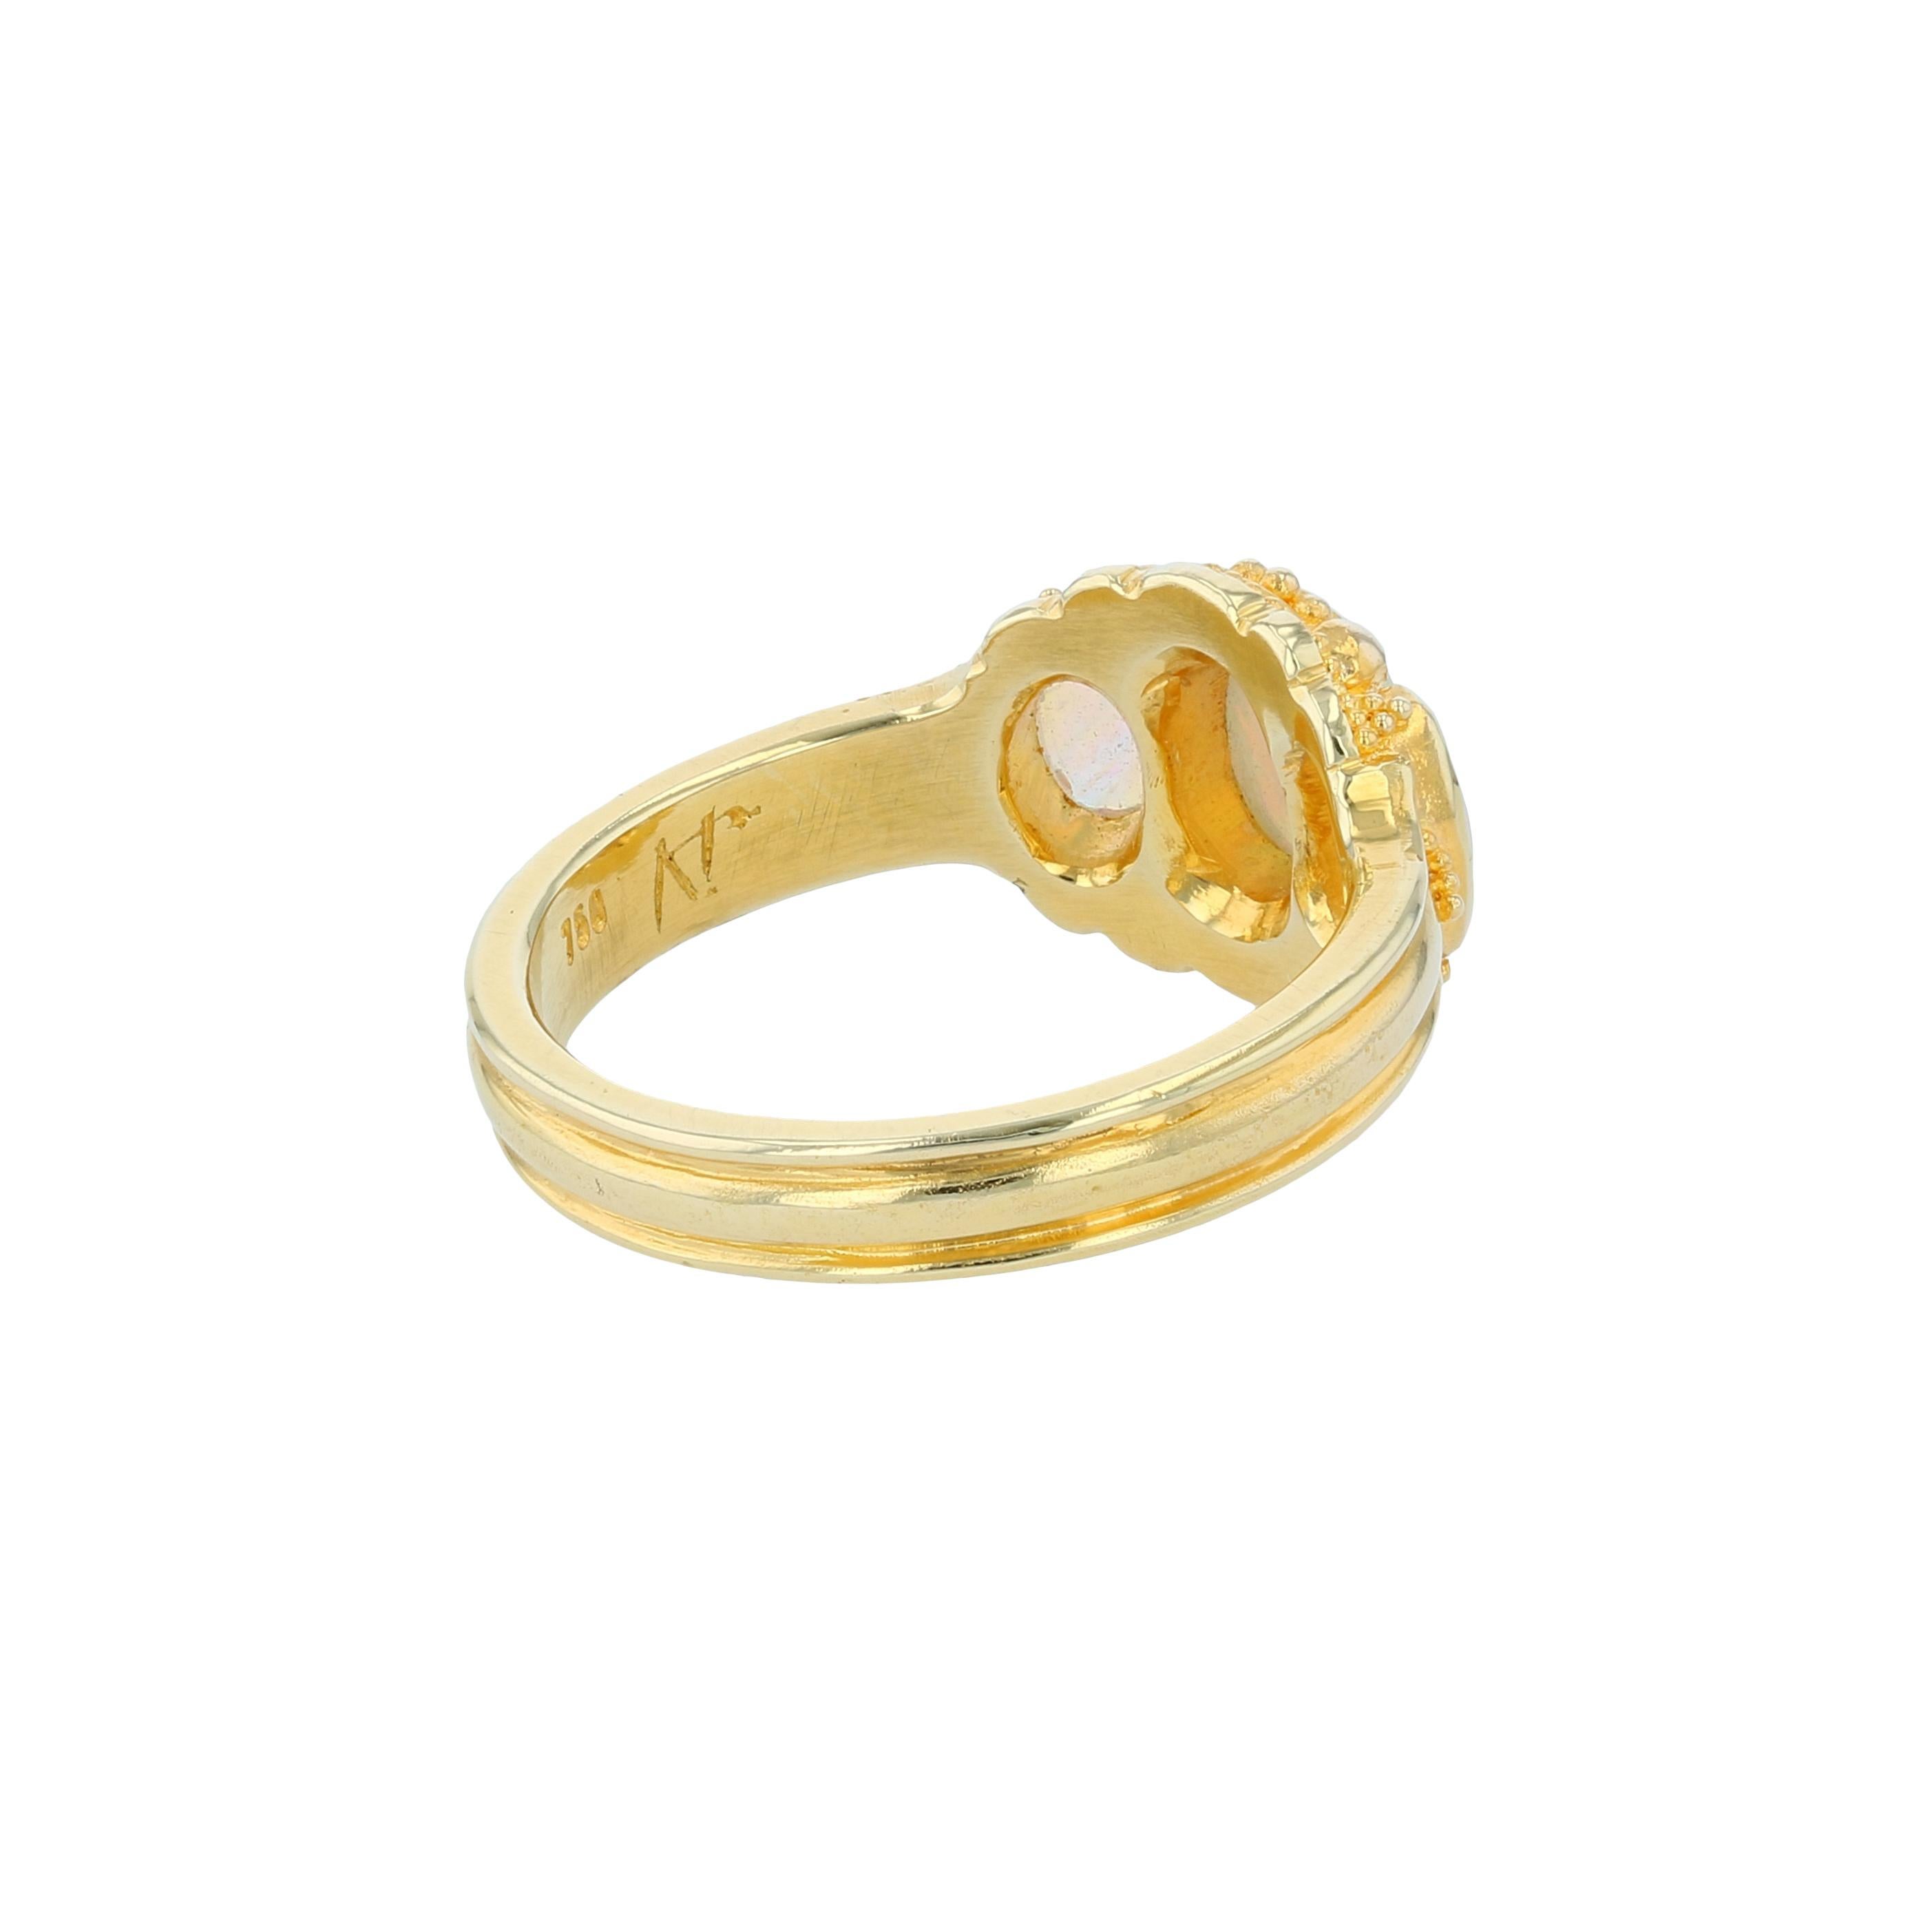 Contemporary Kent Raible Australian Fire Opal Three-Stone Ring with Fine 18k Gold Granulation